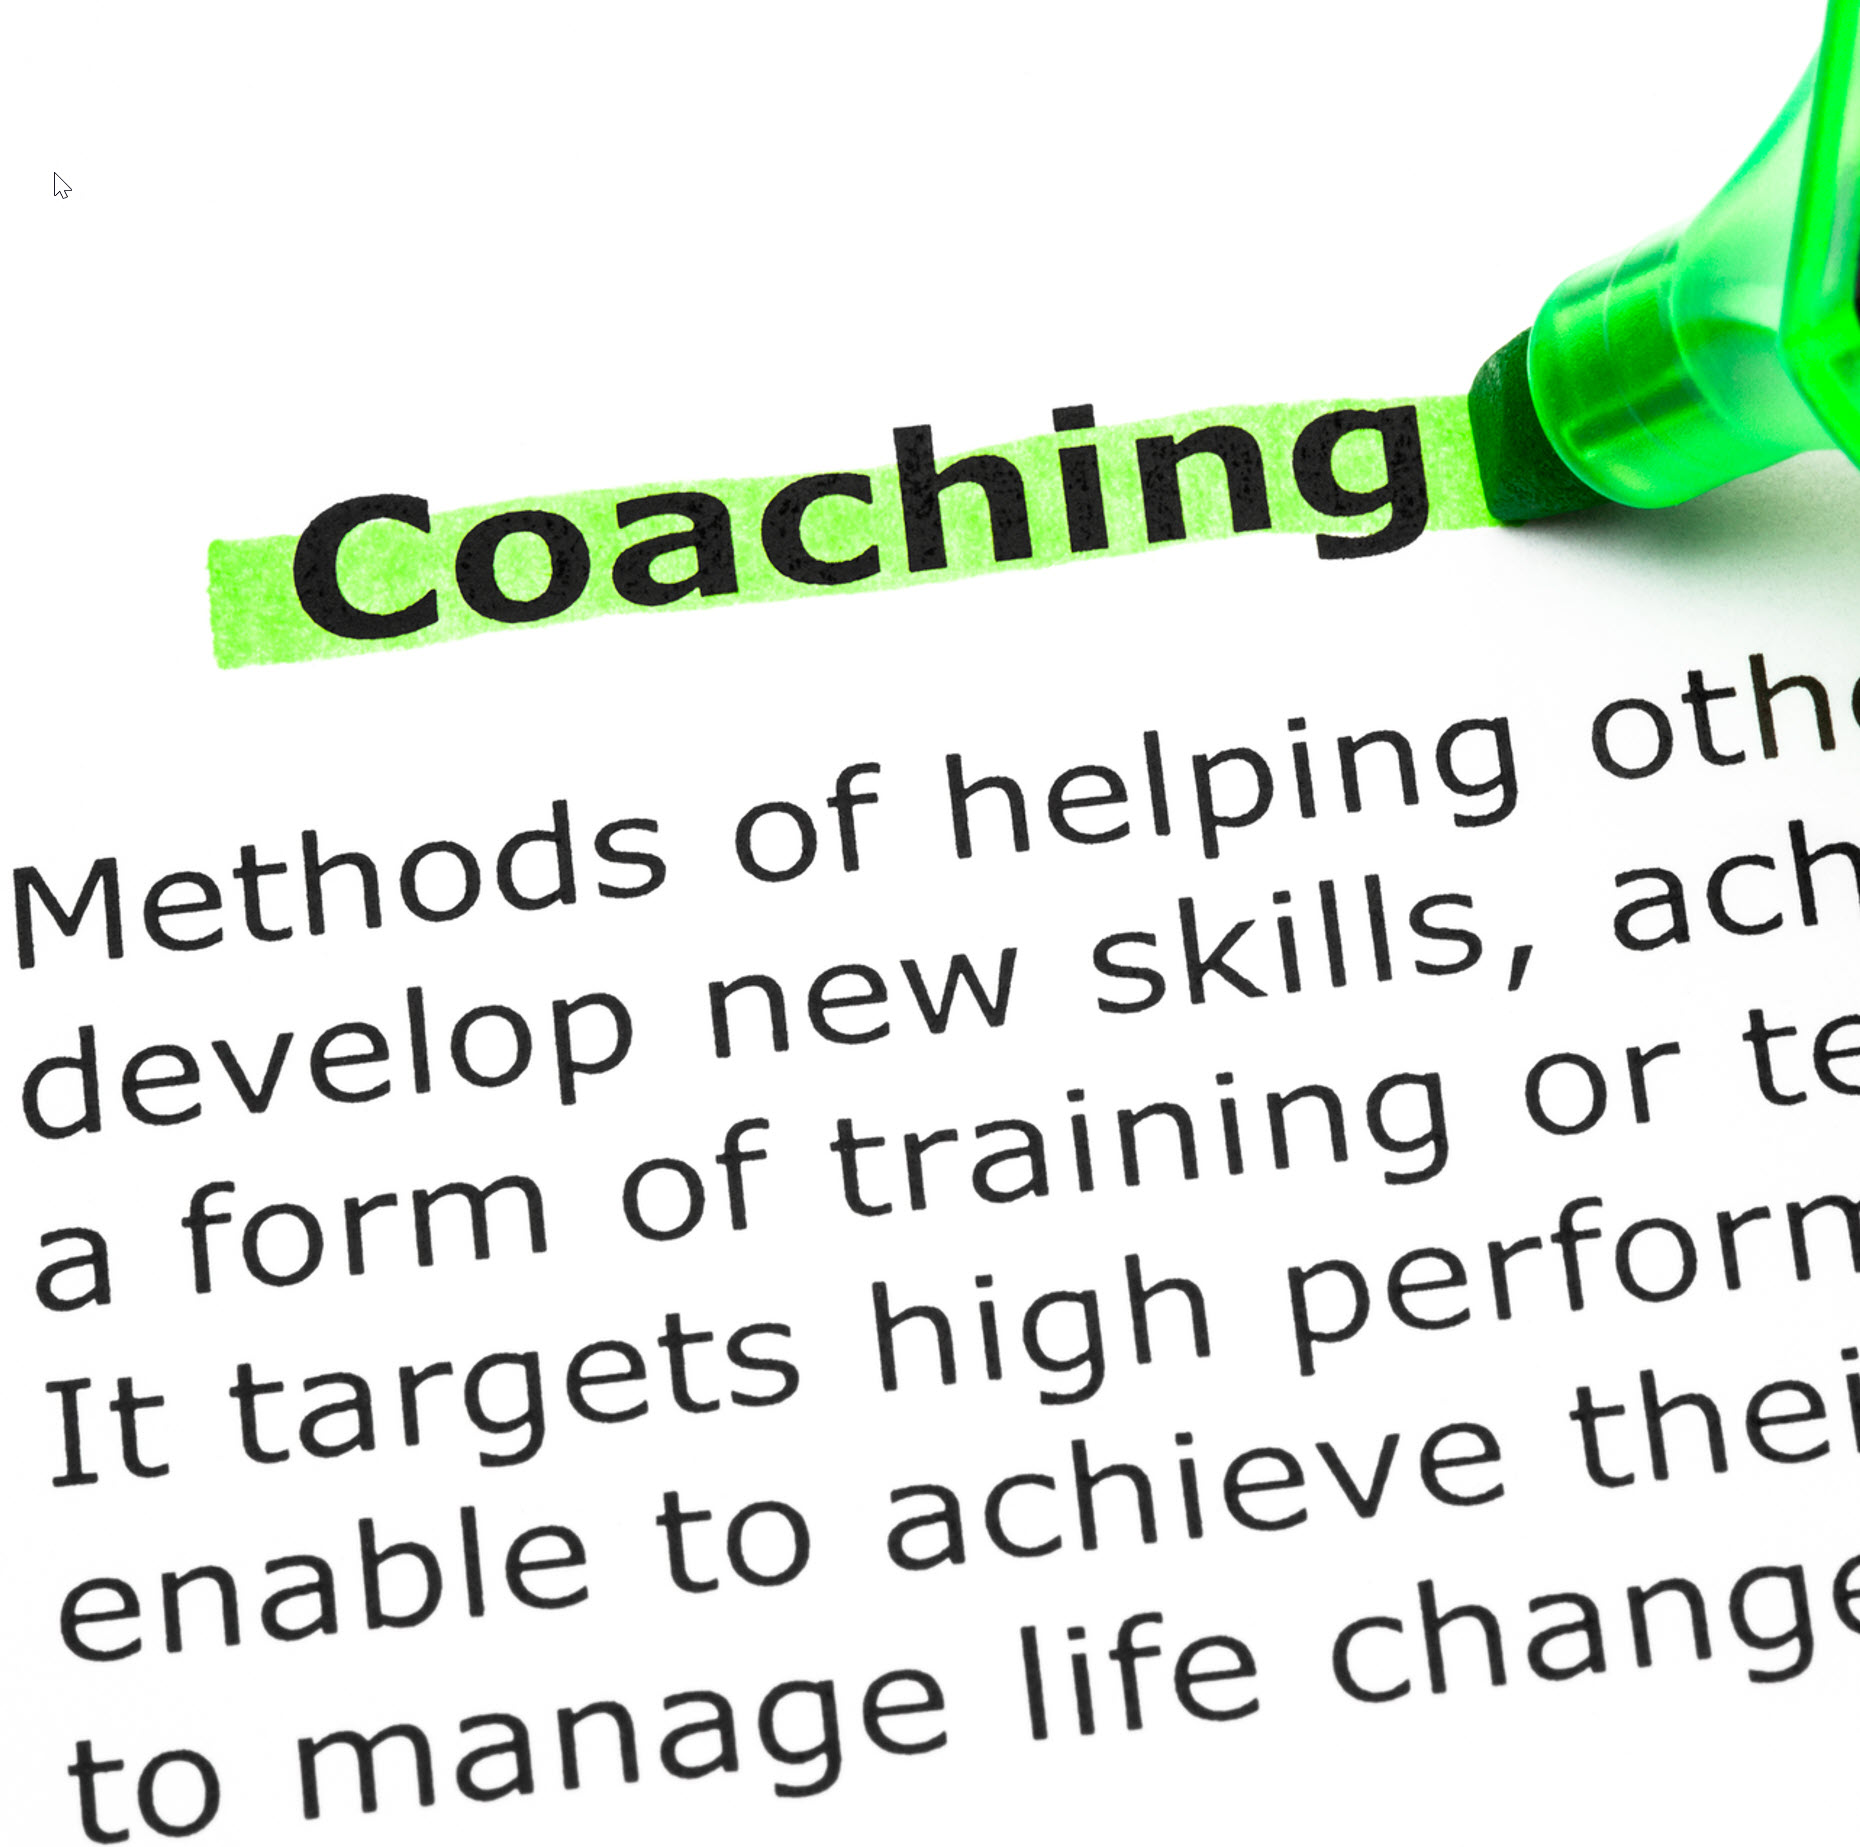 S03 – Coaching your team members